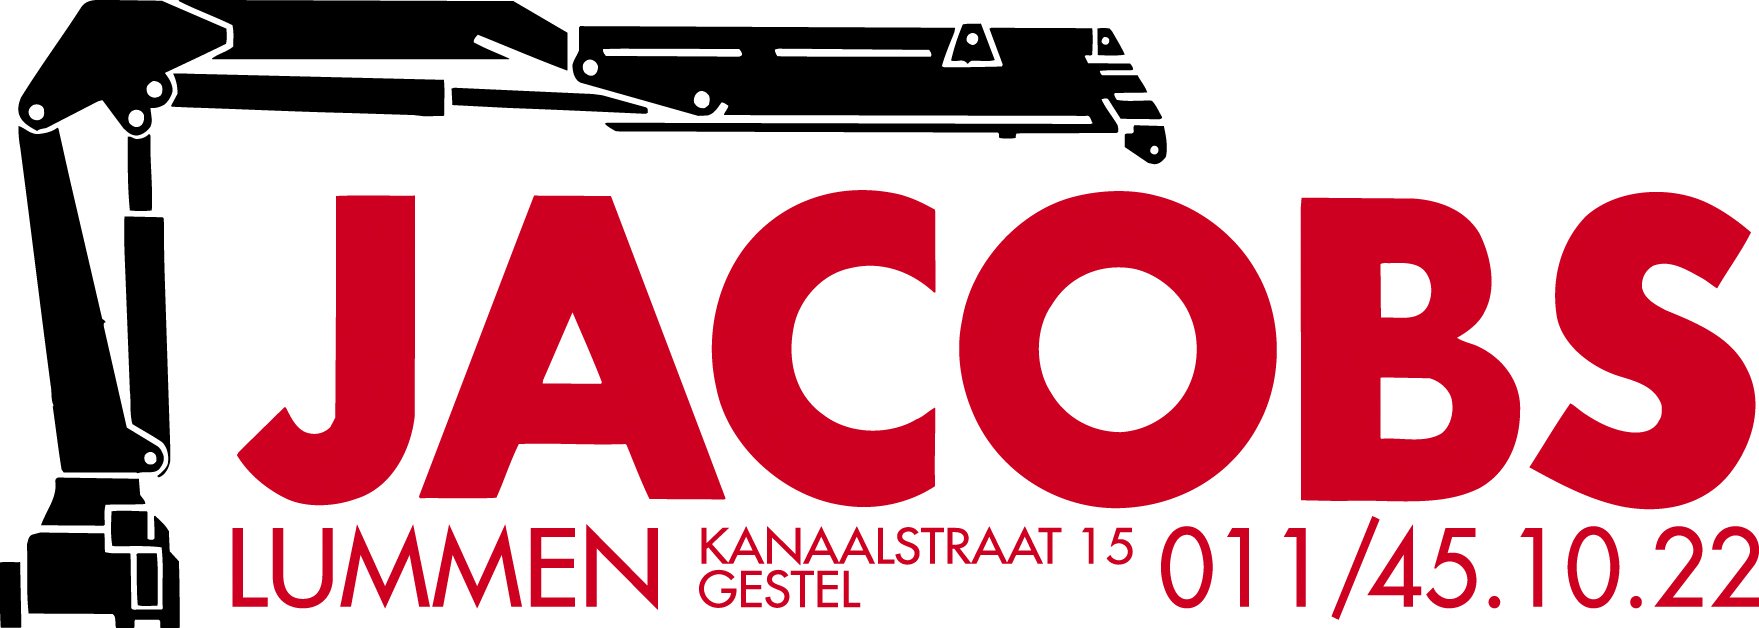 Logo Werkhuizen Jacobs